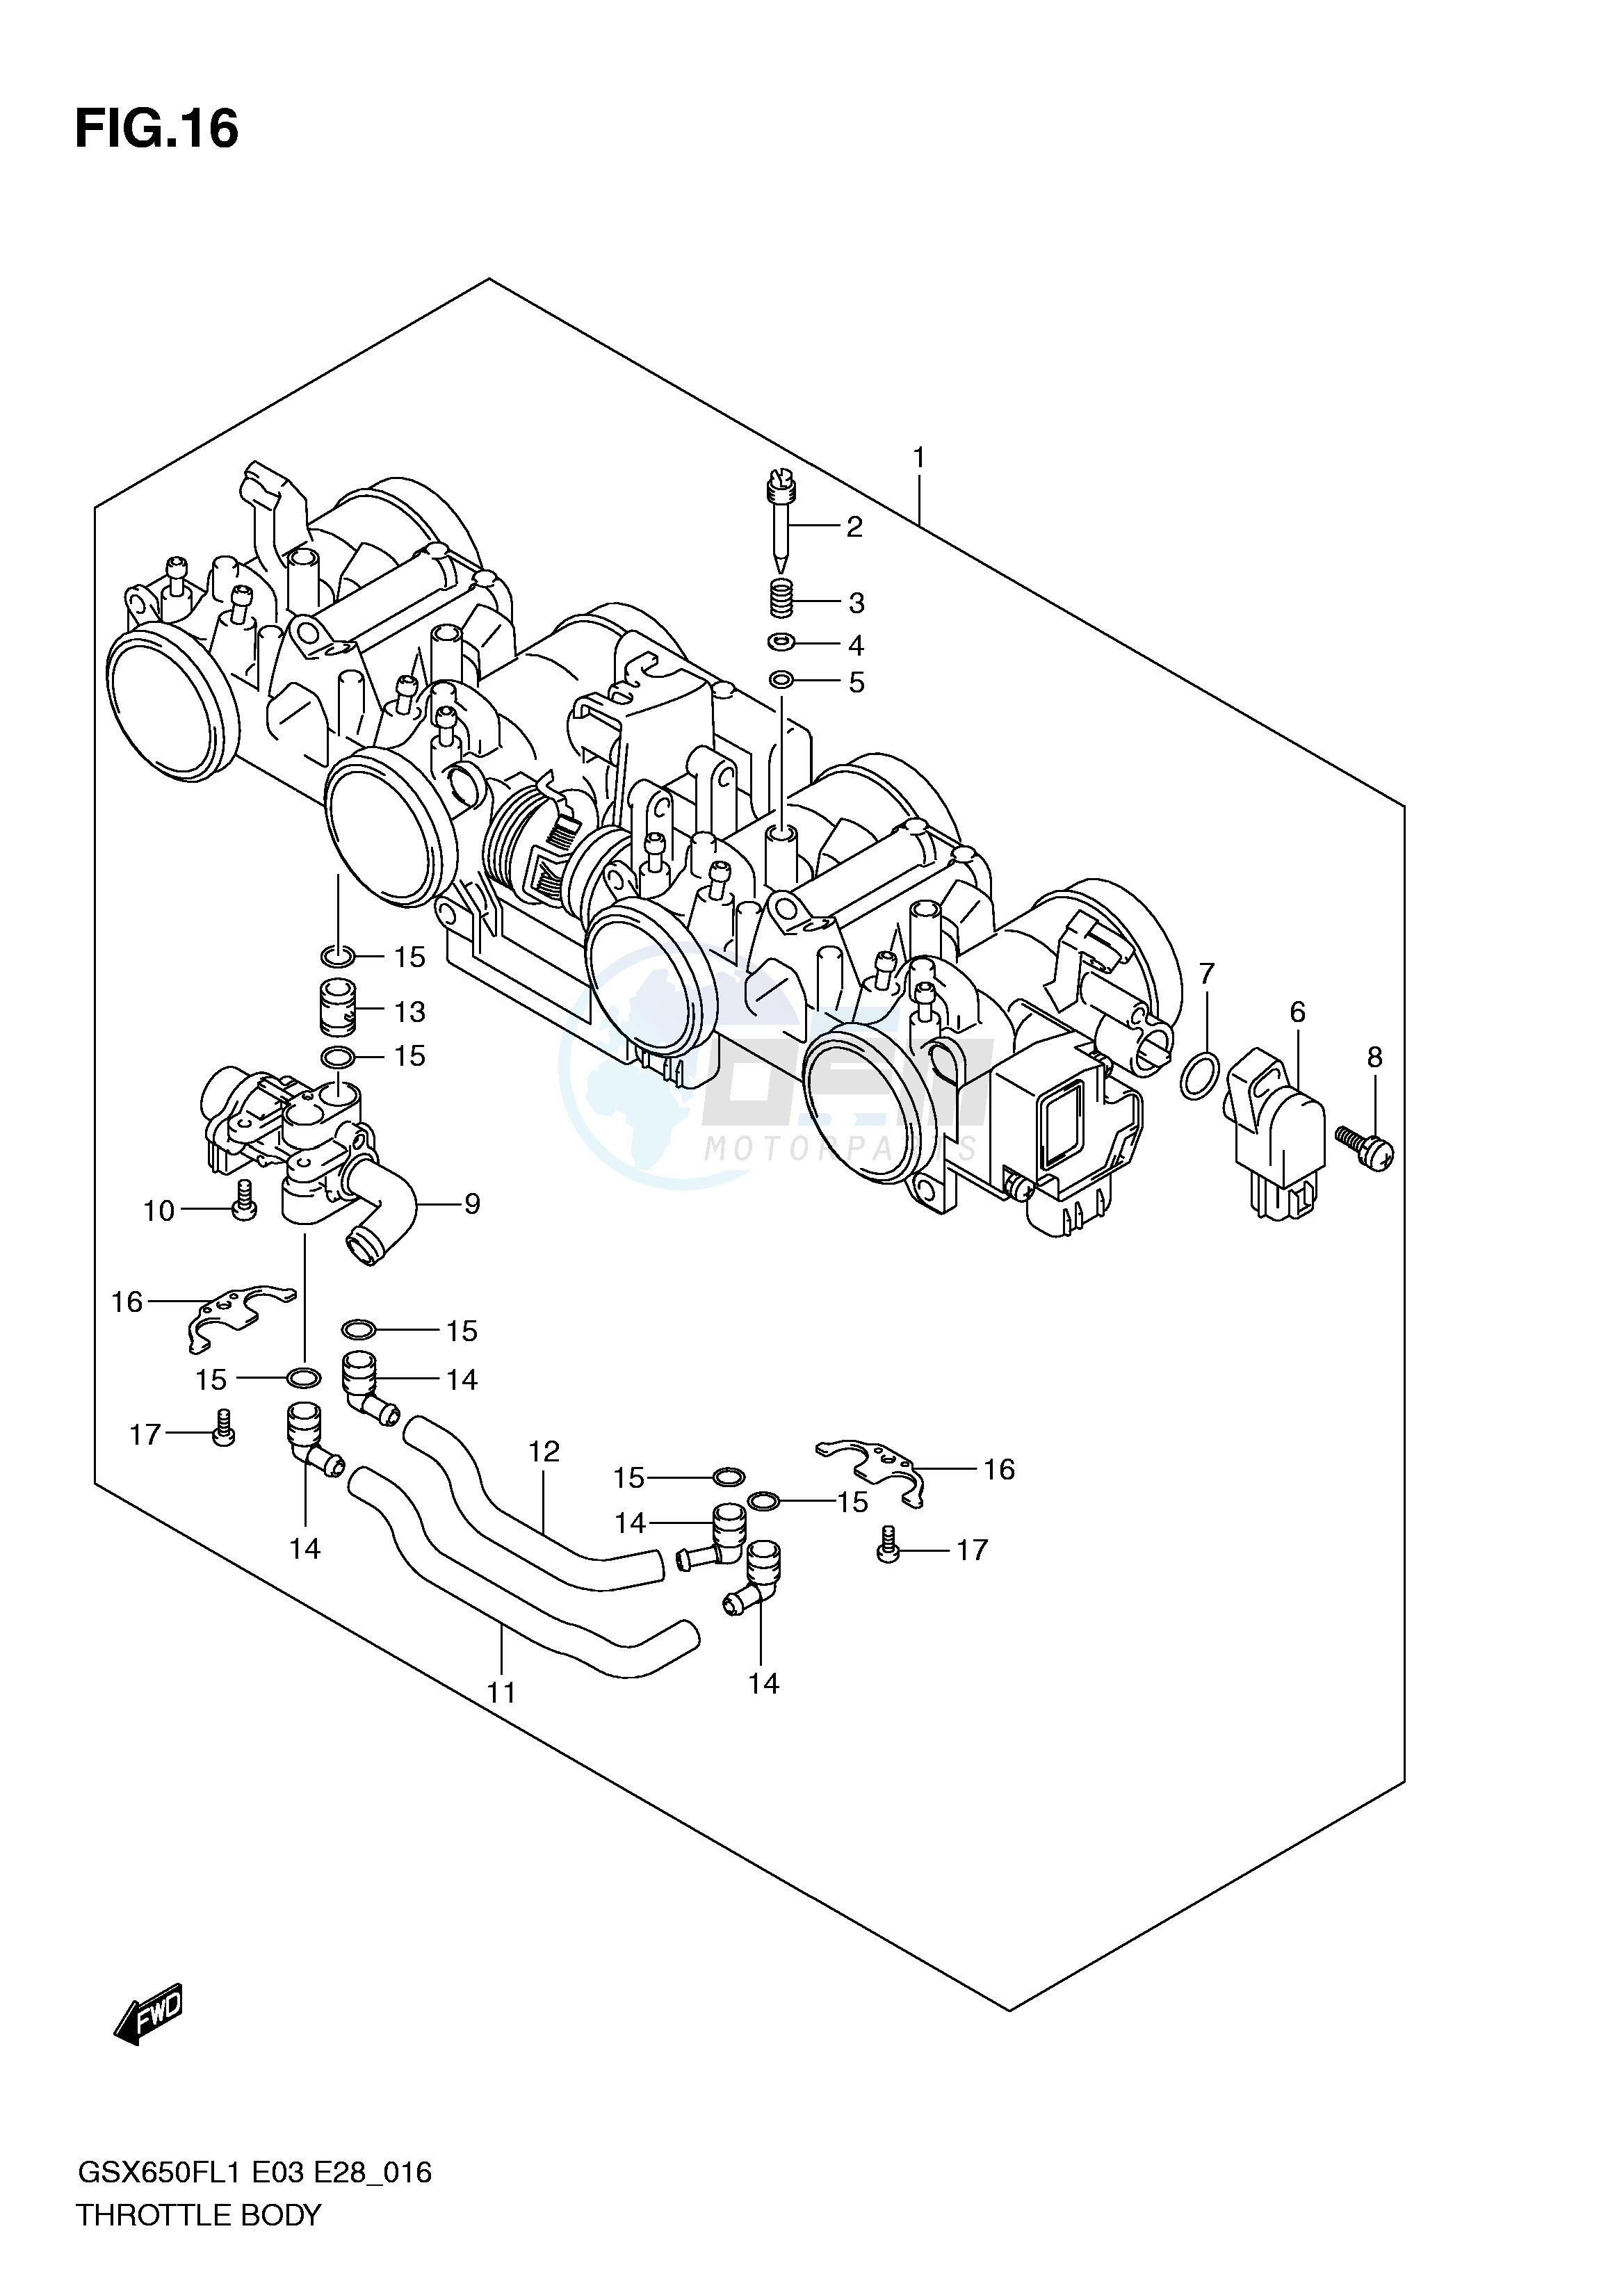 THROTTLE BODY (GSX650FAL1 E33) blueprint